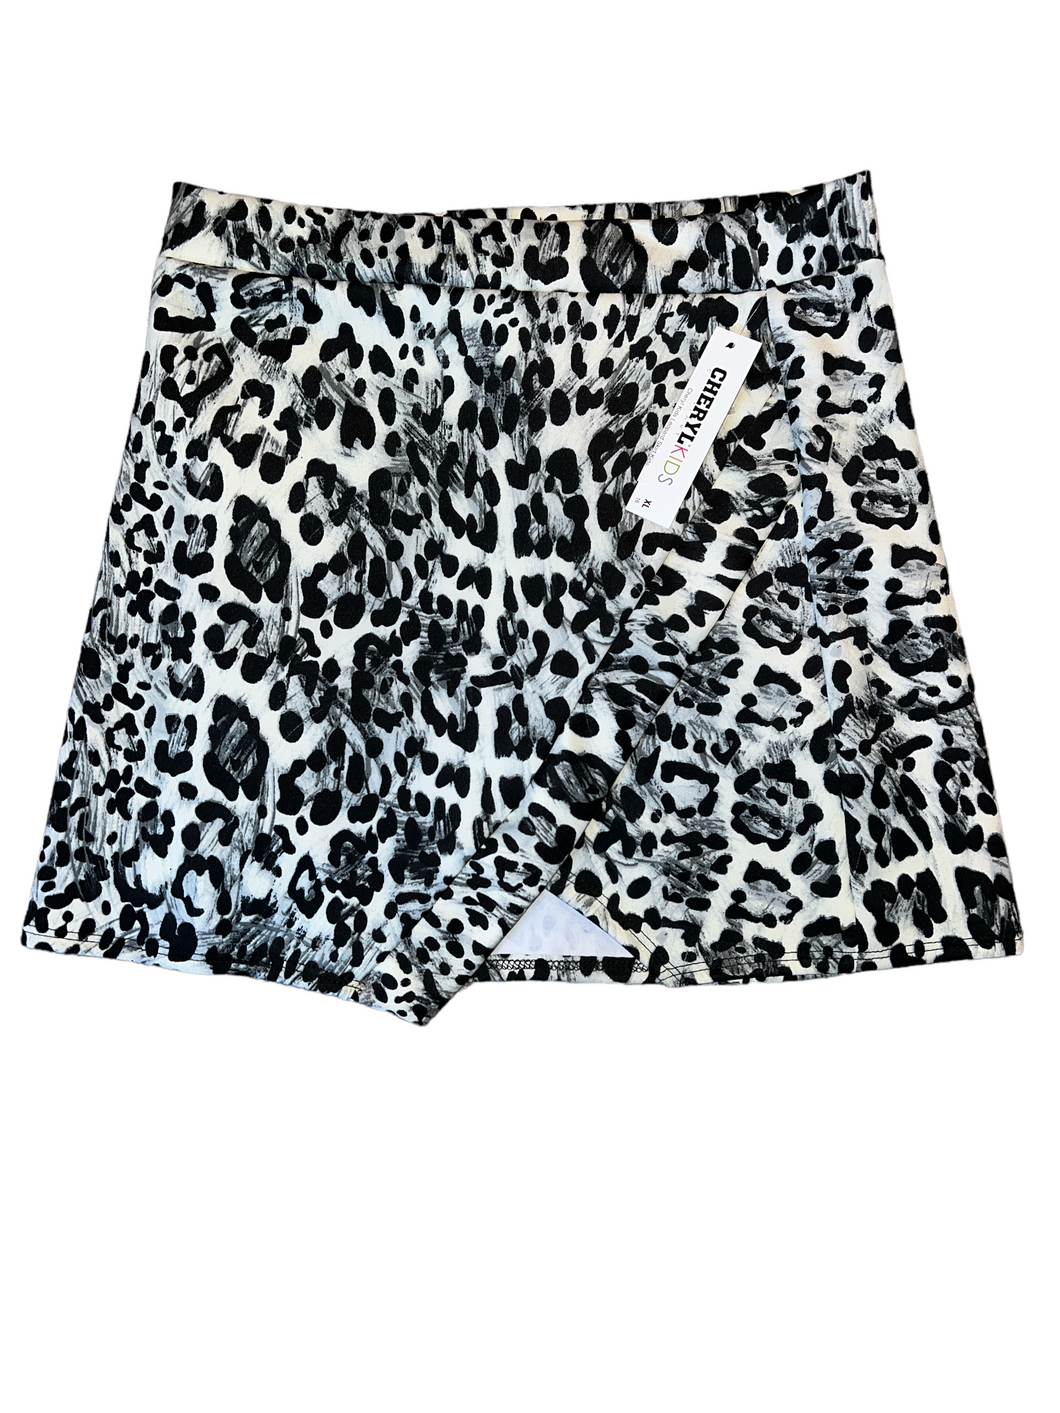 Cheryl Creations Kids leopard crossover skirt XL(16) NEW